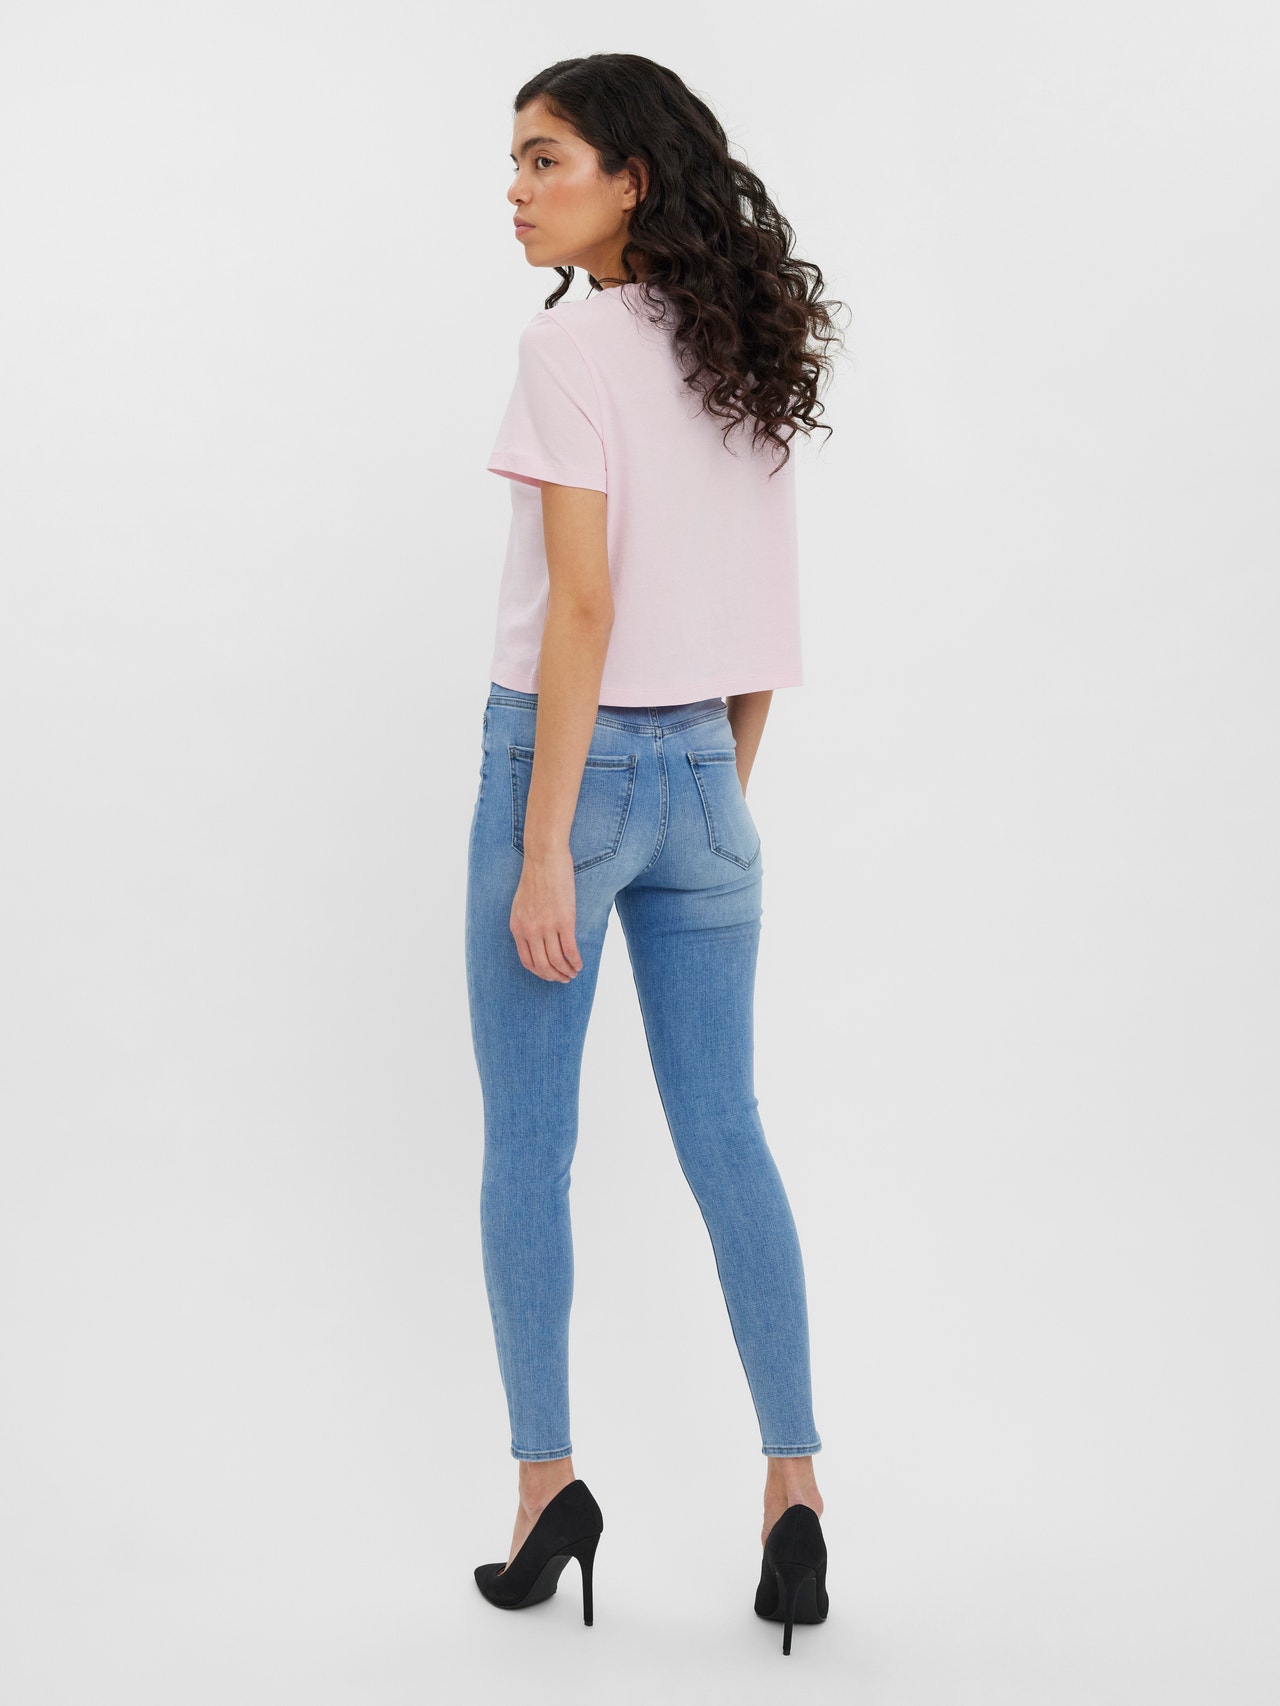 VMSOPHIA High rise Jeans 20% discount! Moda® Vero | with